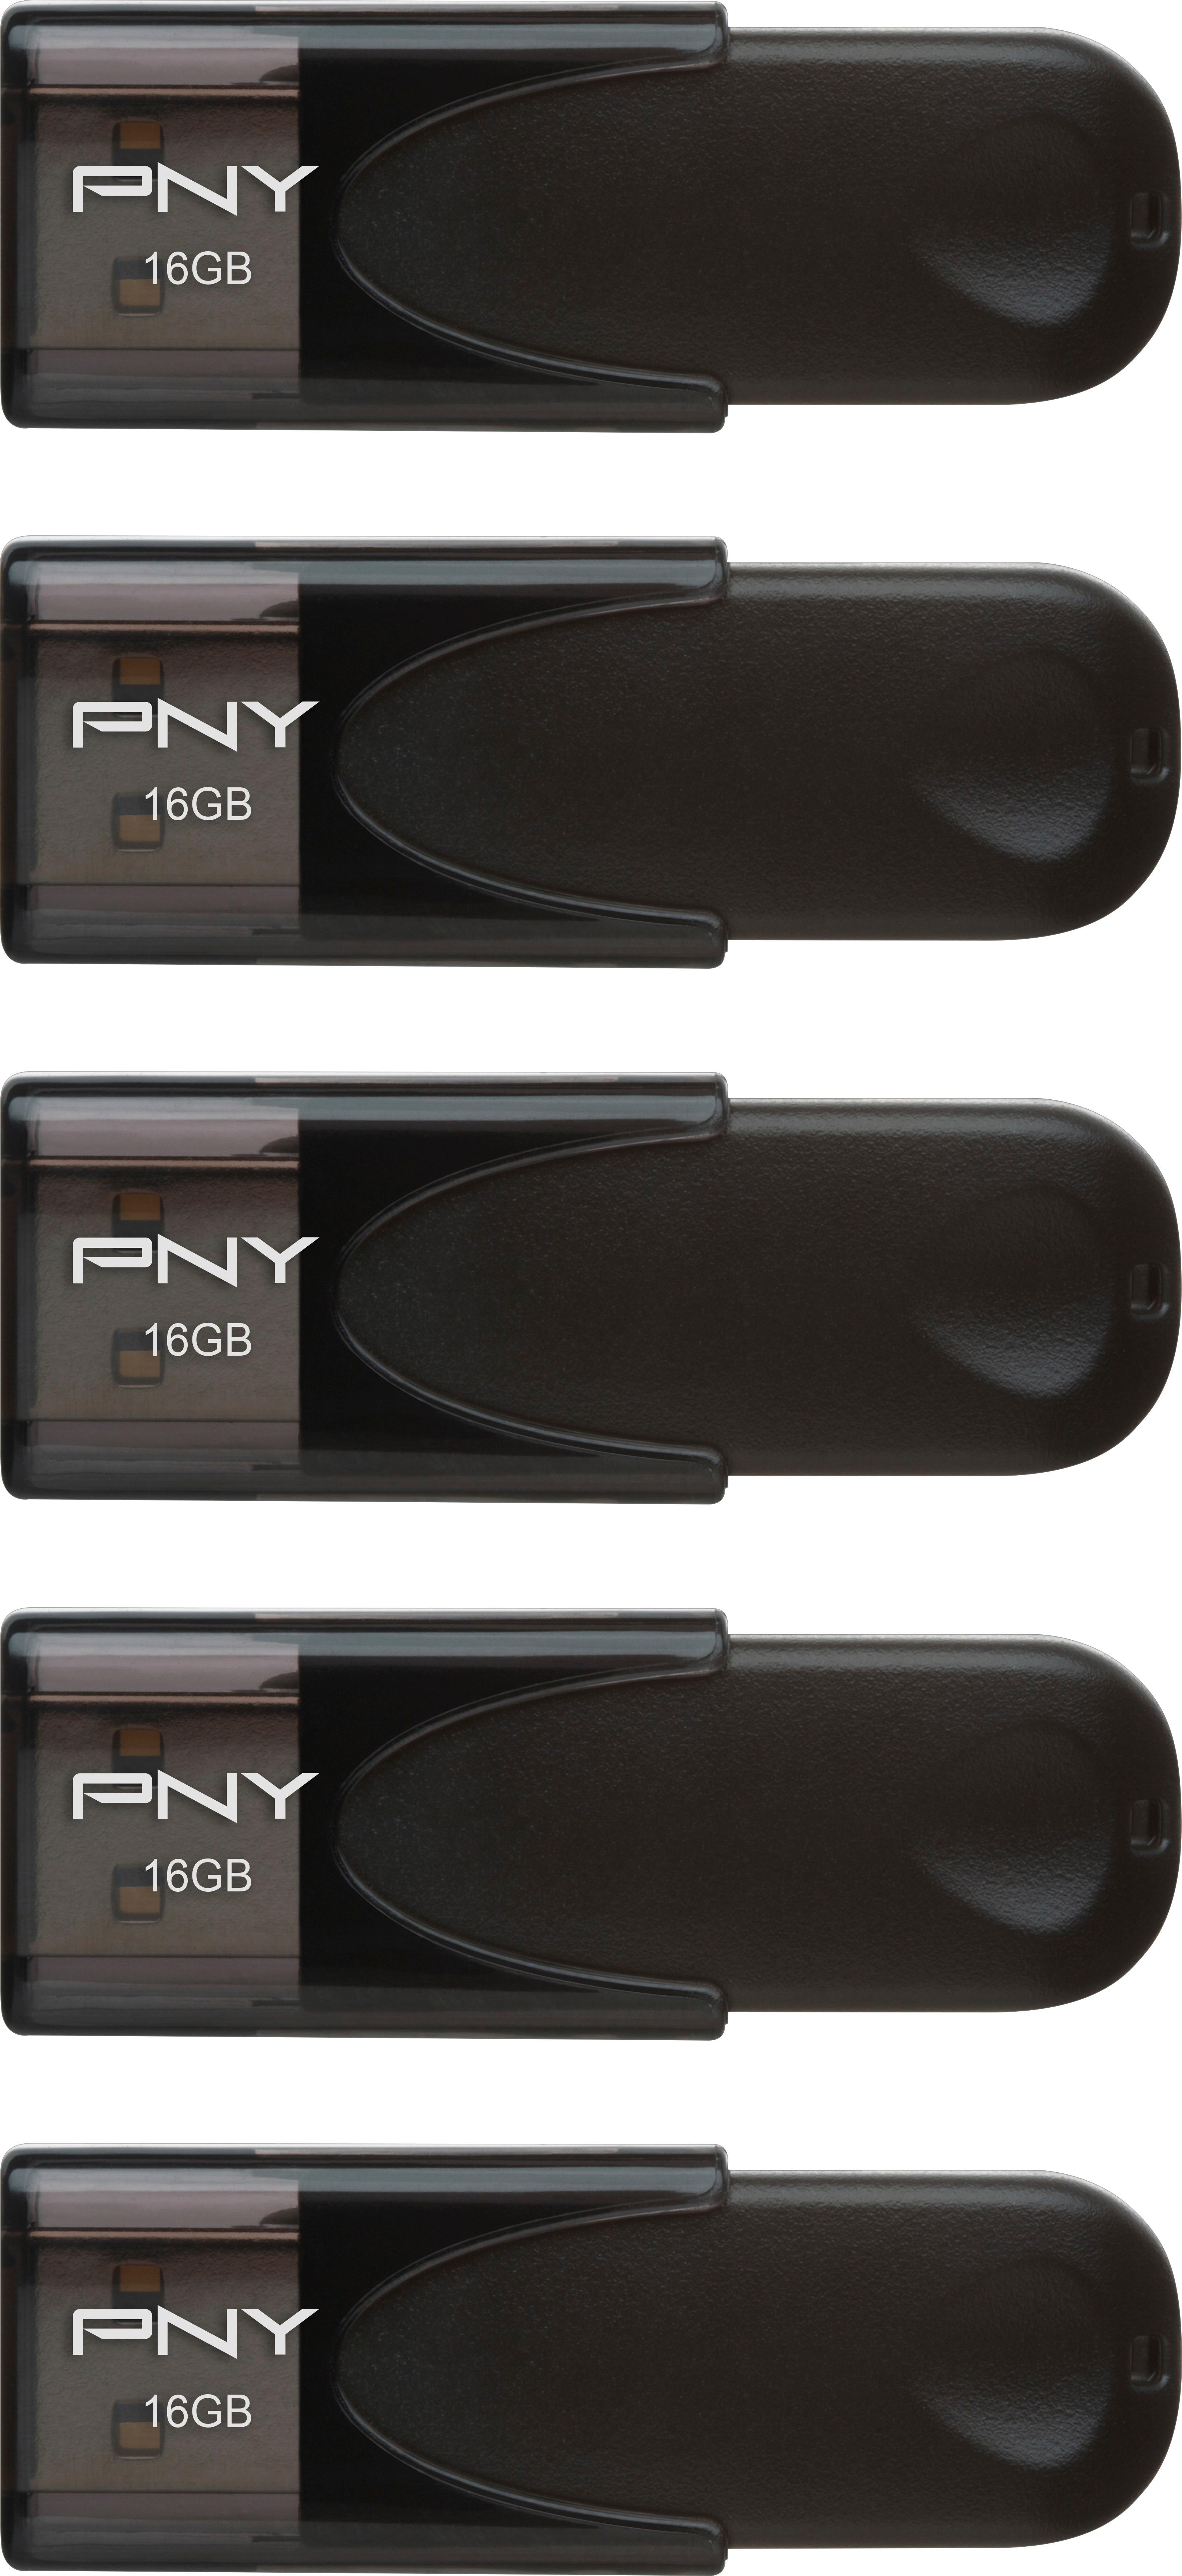 PNY - AttachÃ© 4 16GB USB 2.0 Flash Drive (5-Pack) - Black was $29.99 now $15.99 (47.0% off)